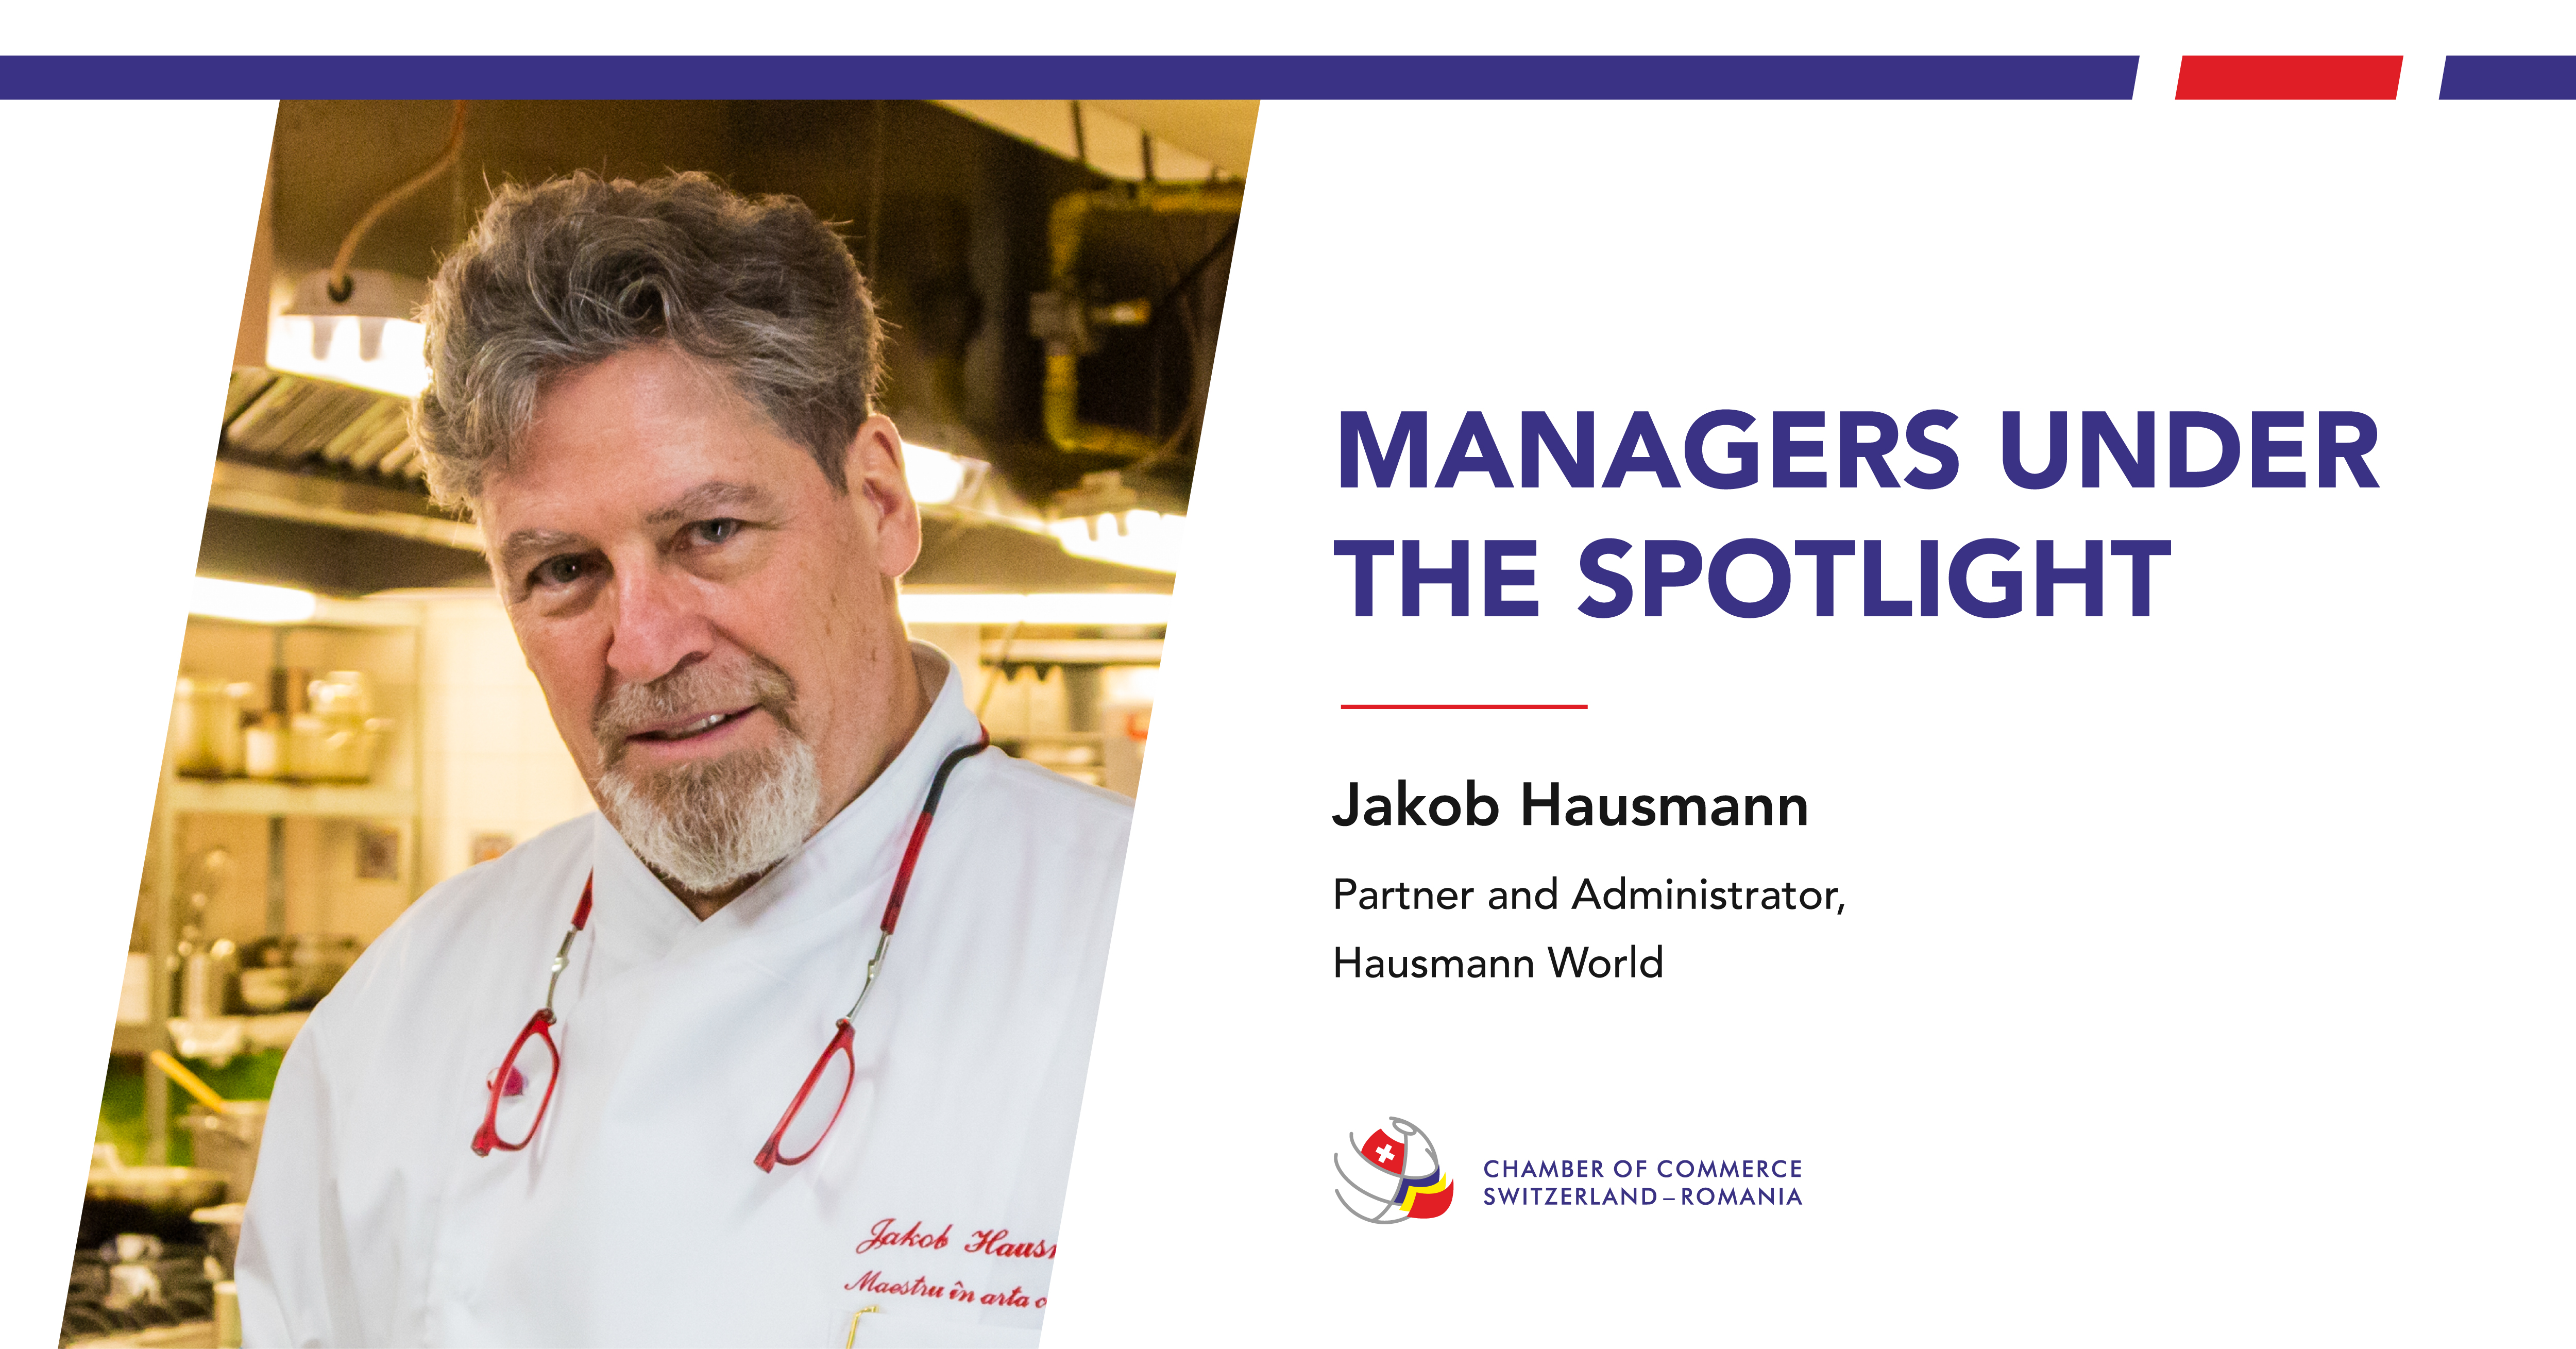 Managers under the spotlight - Jakob Hausmann, Partner and Administrator, Hausmann World